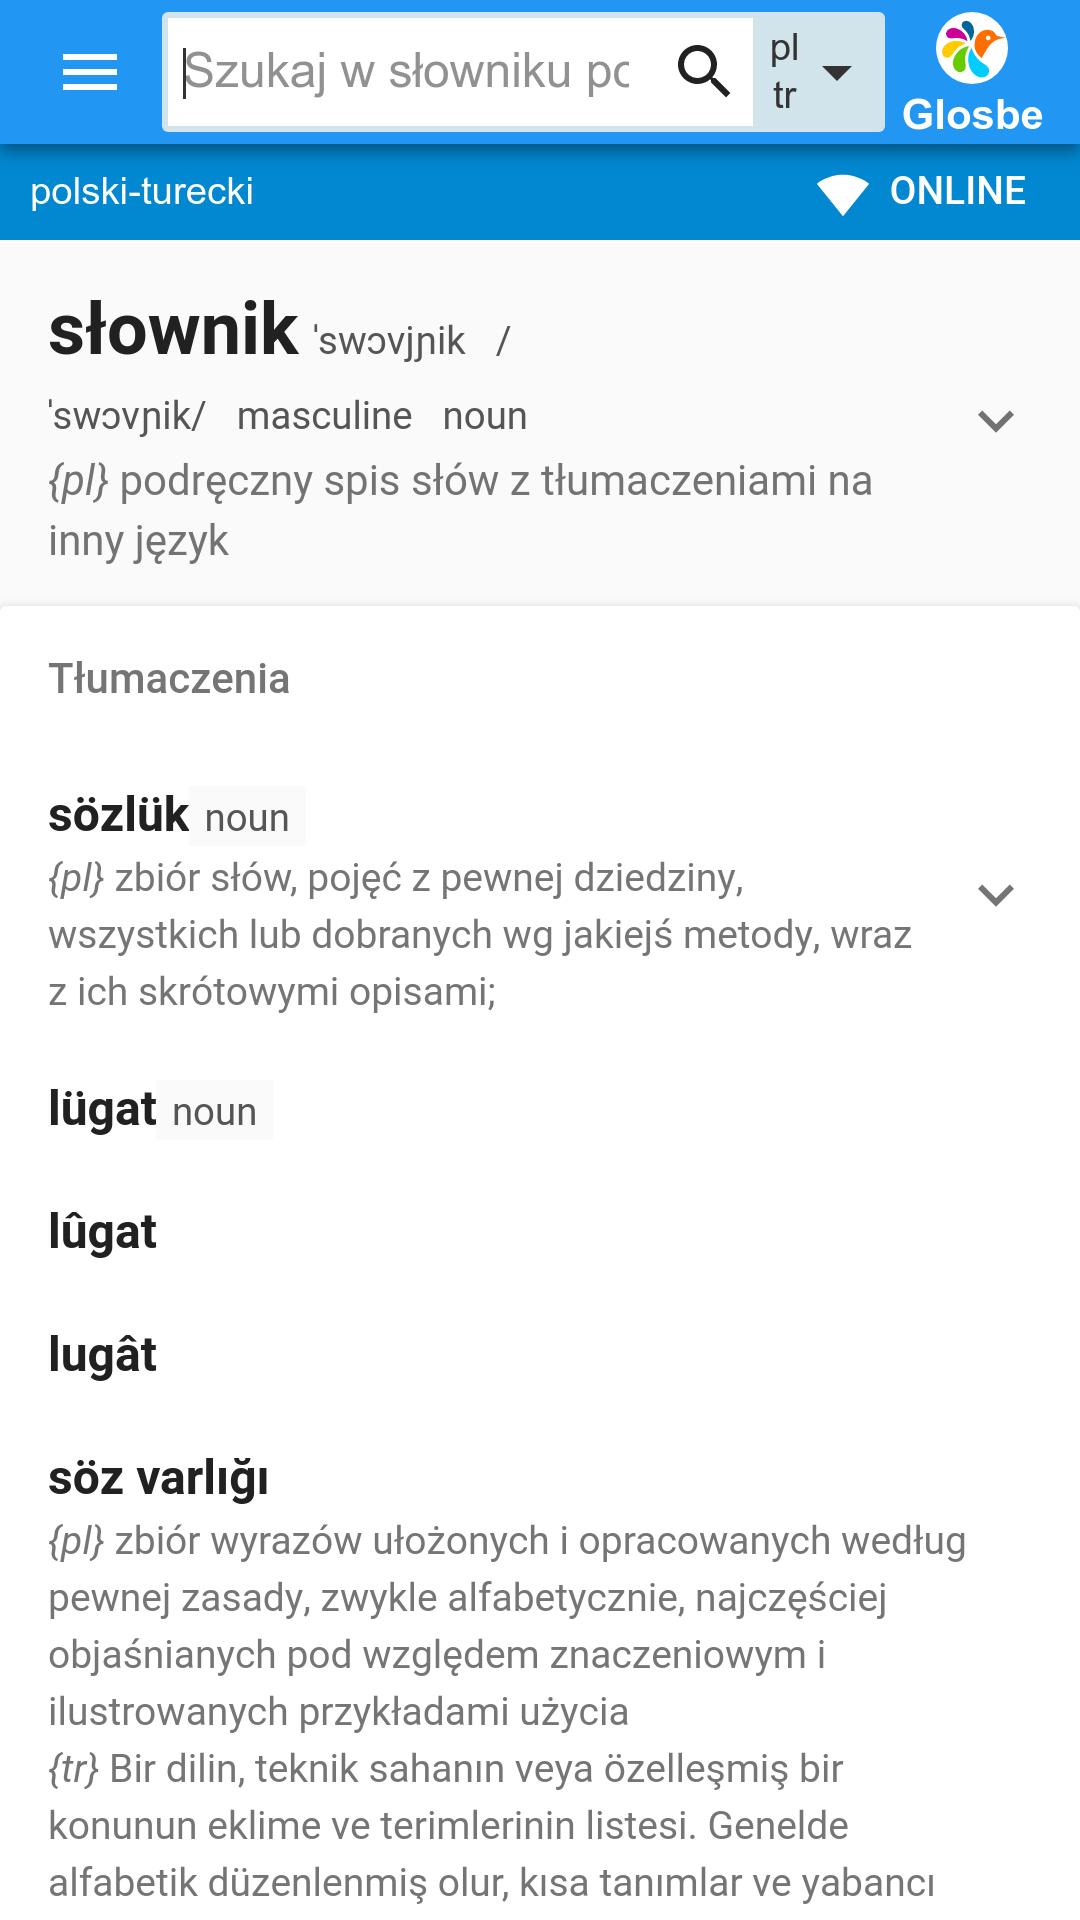 Turecko-Polski słownik for Android - APK Download